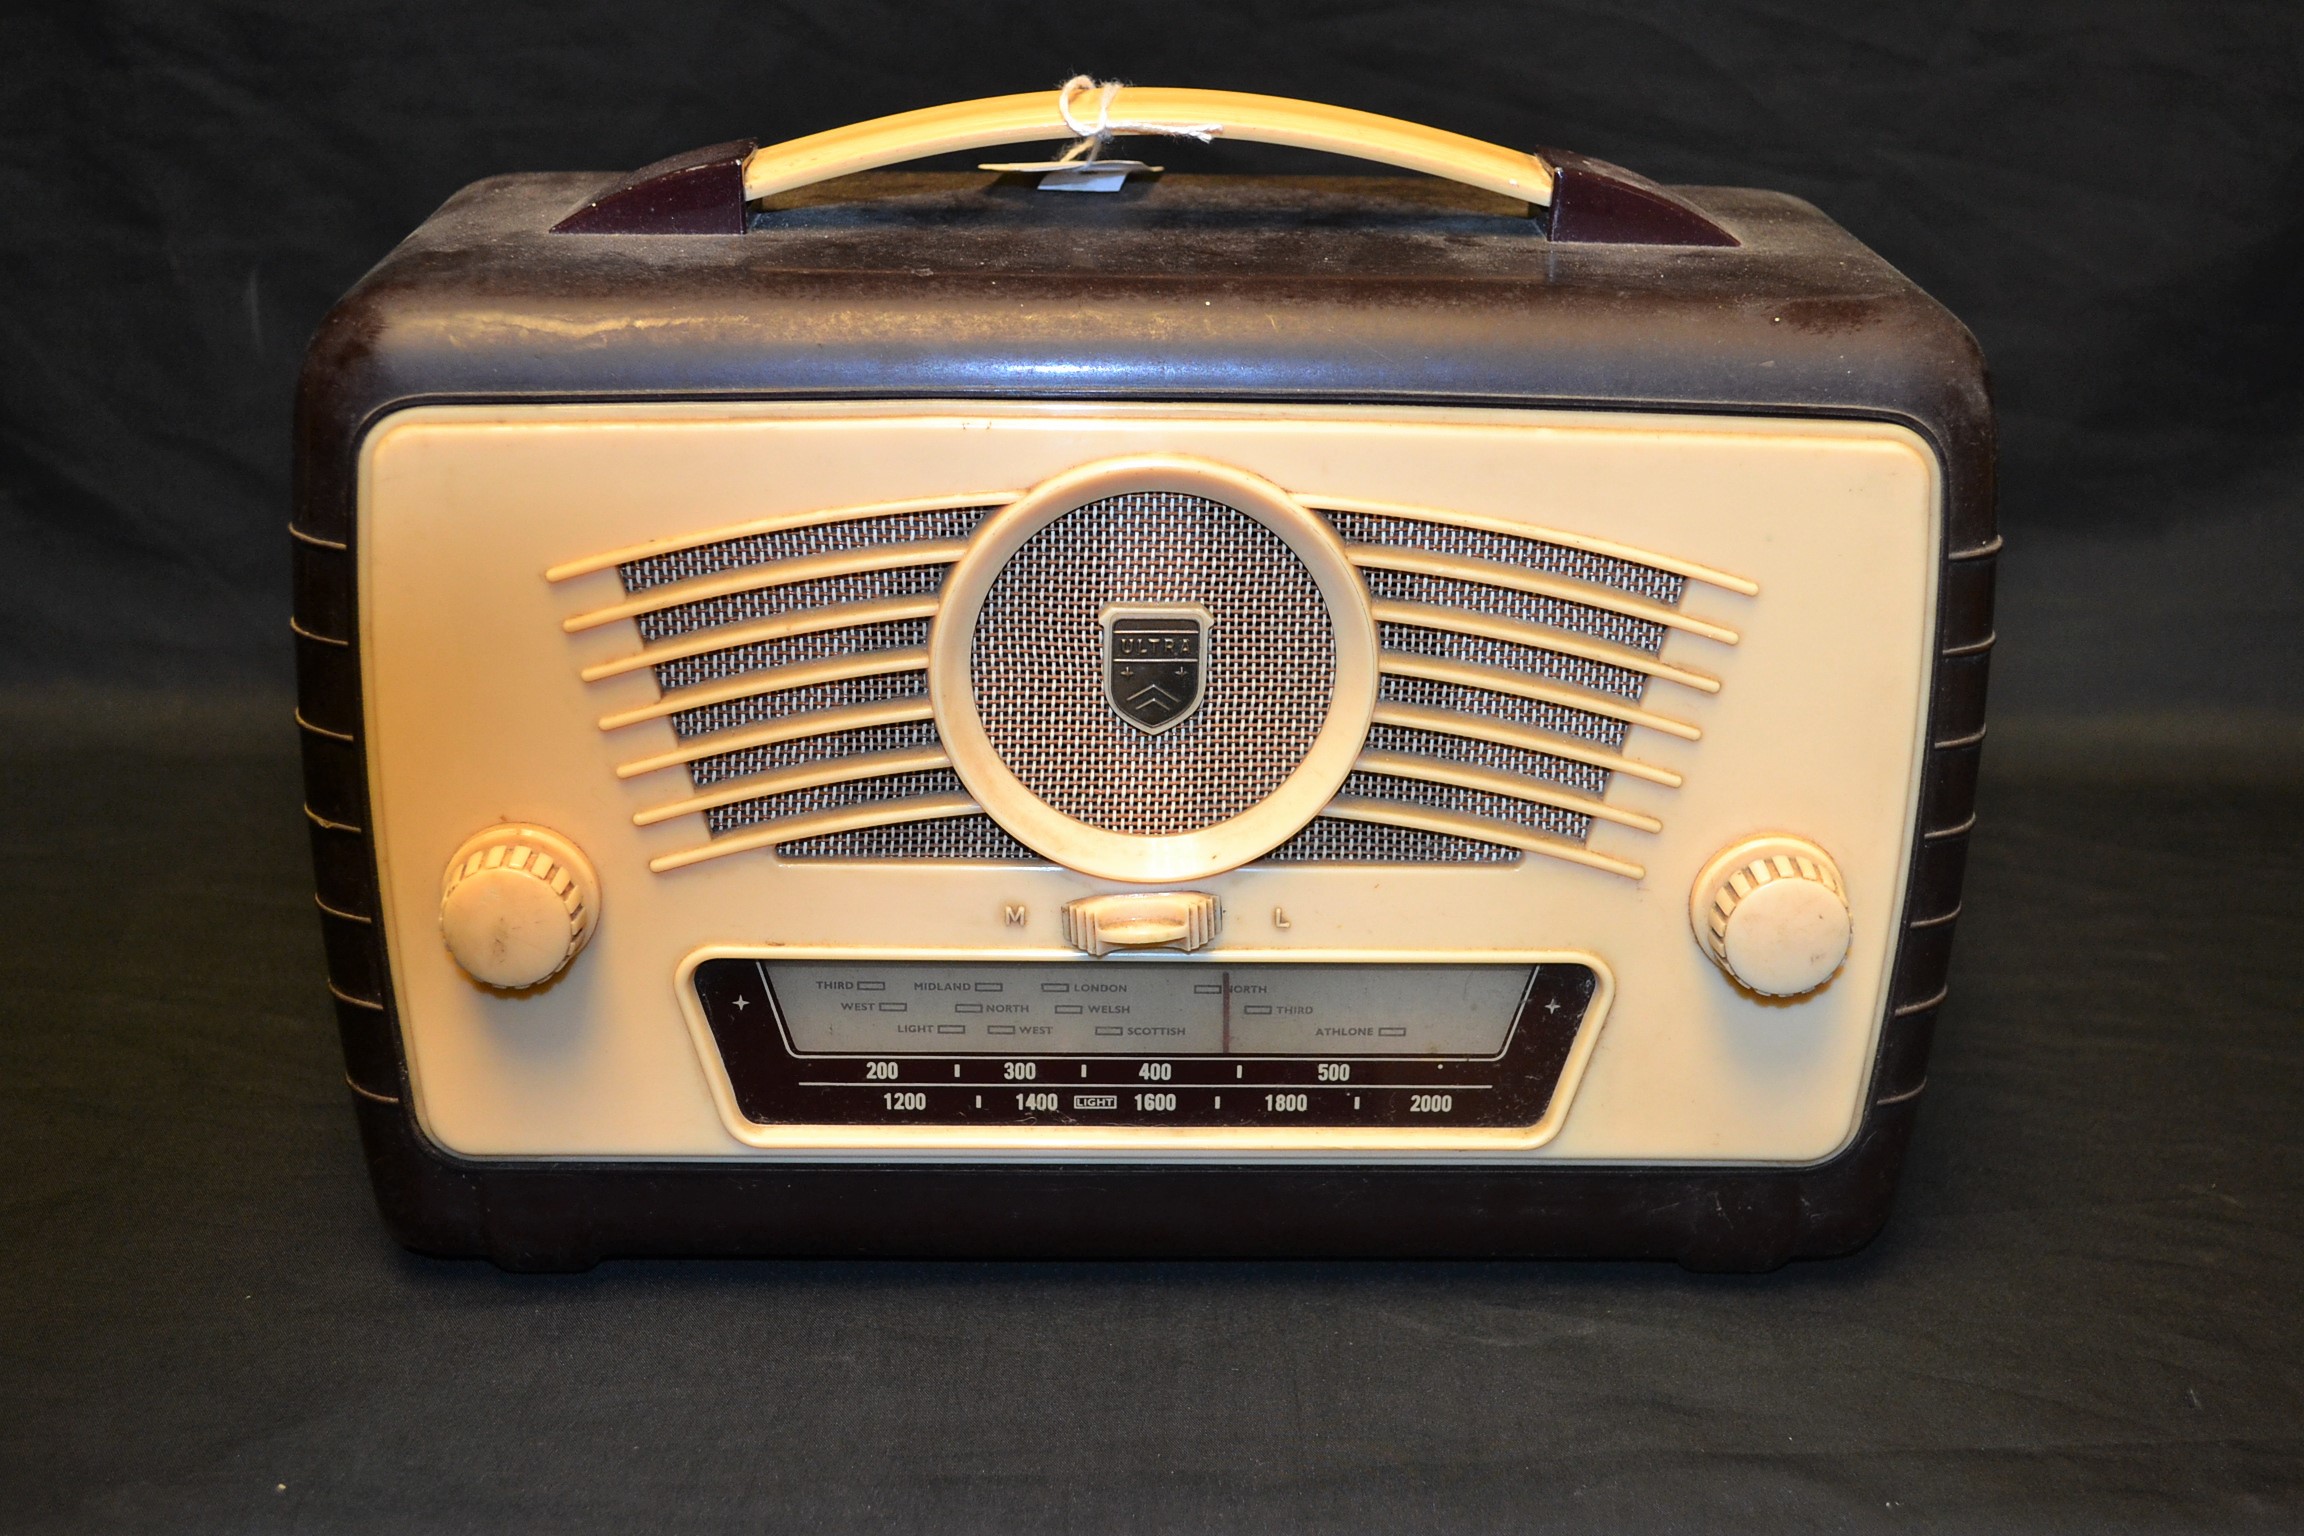 An Ultra bakelite vintage radio